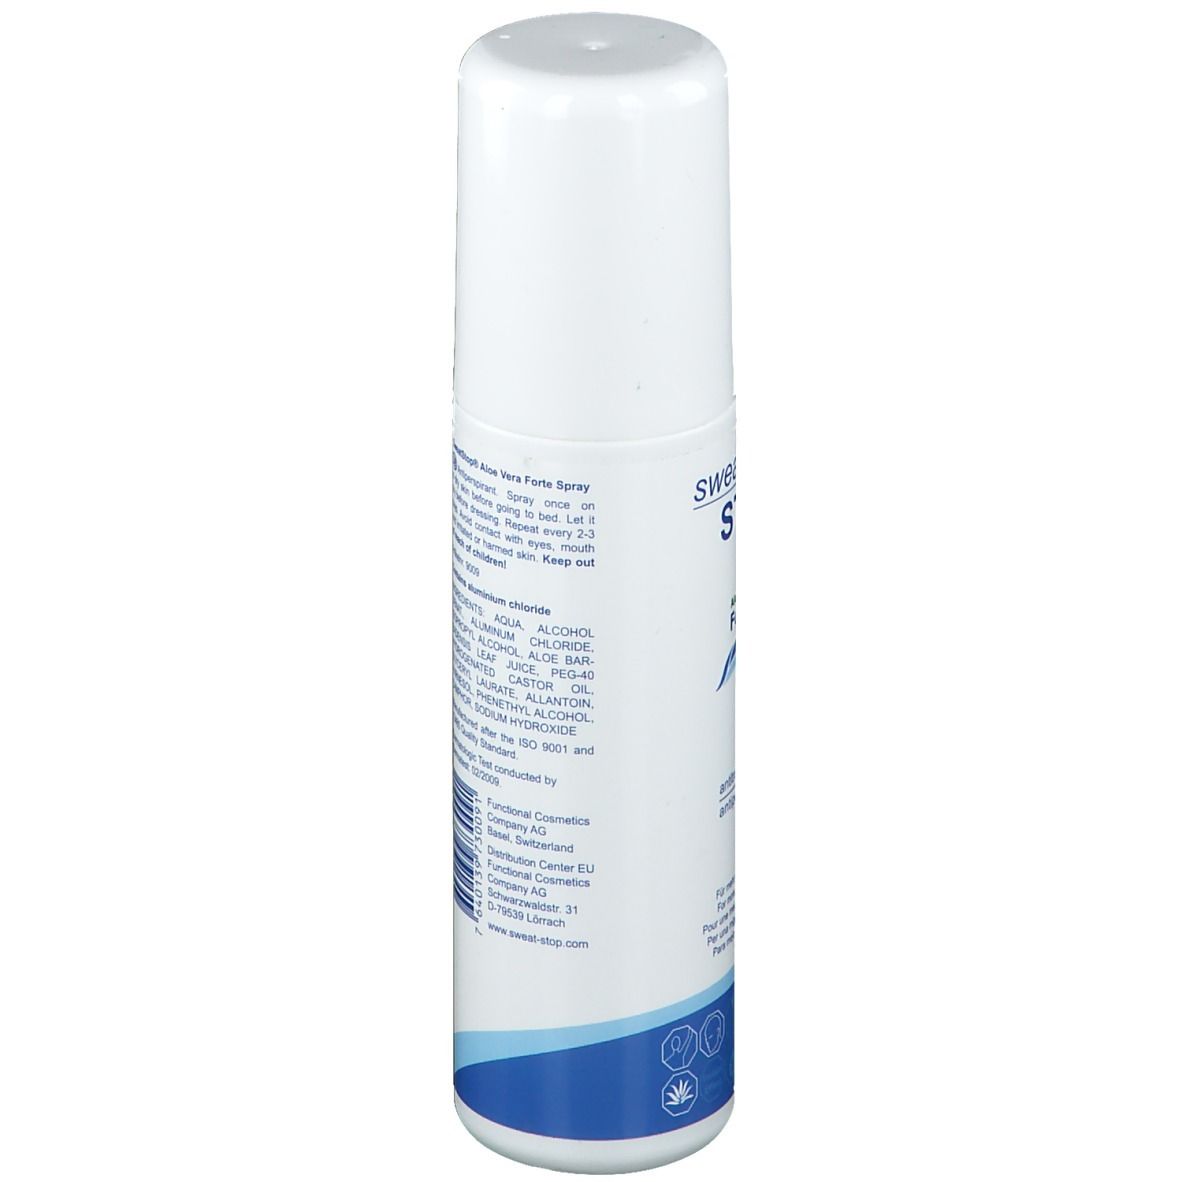 SweatStop® Aloe Vera Forte Spray antitranspirant à l'Aloe Vera Forte